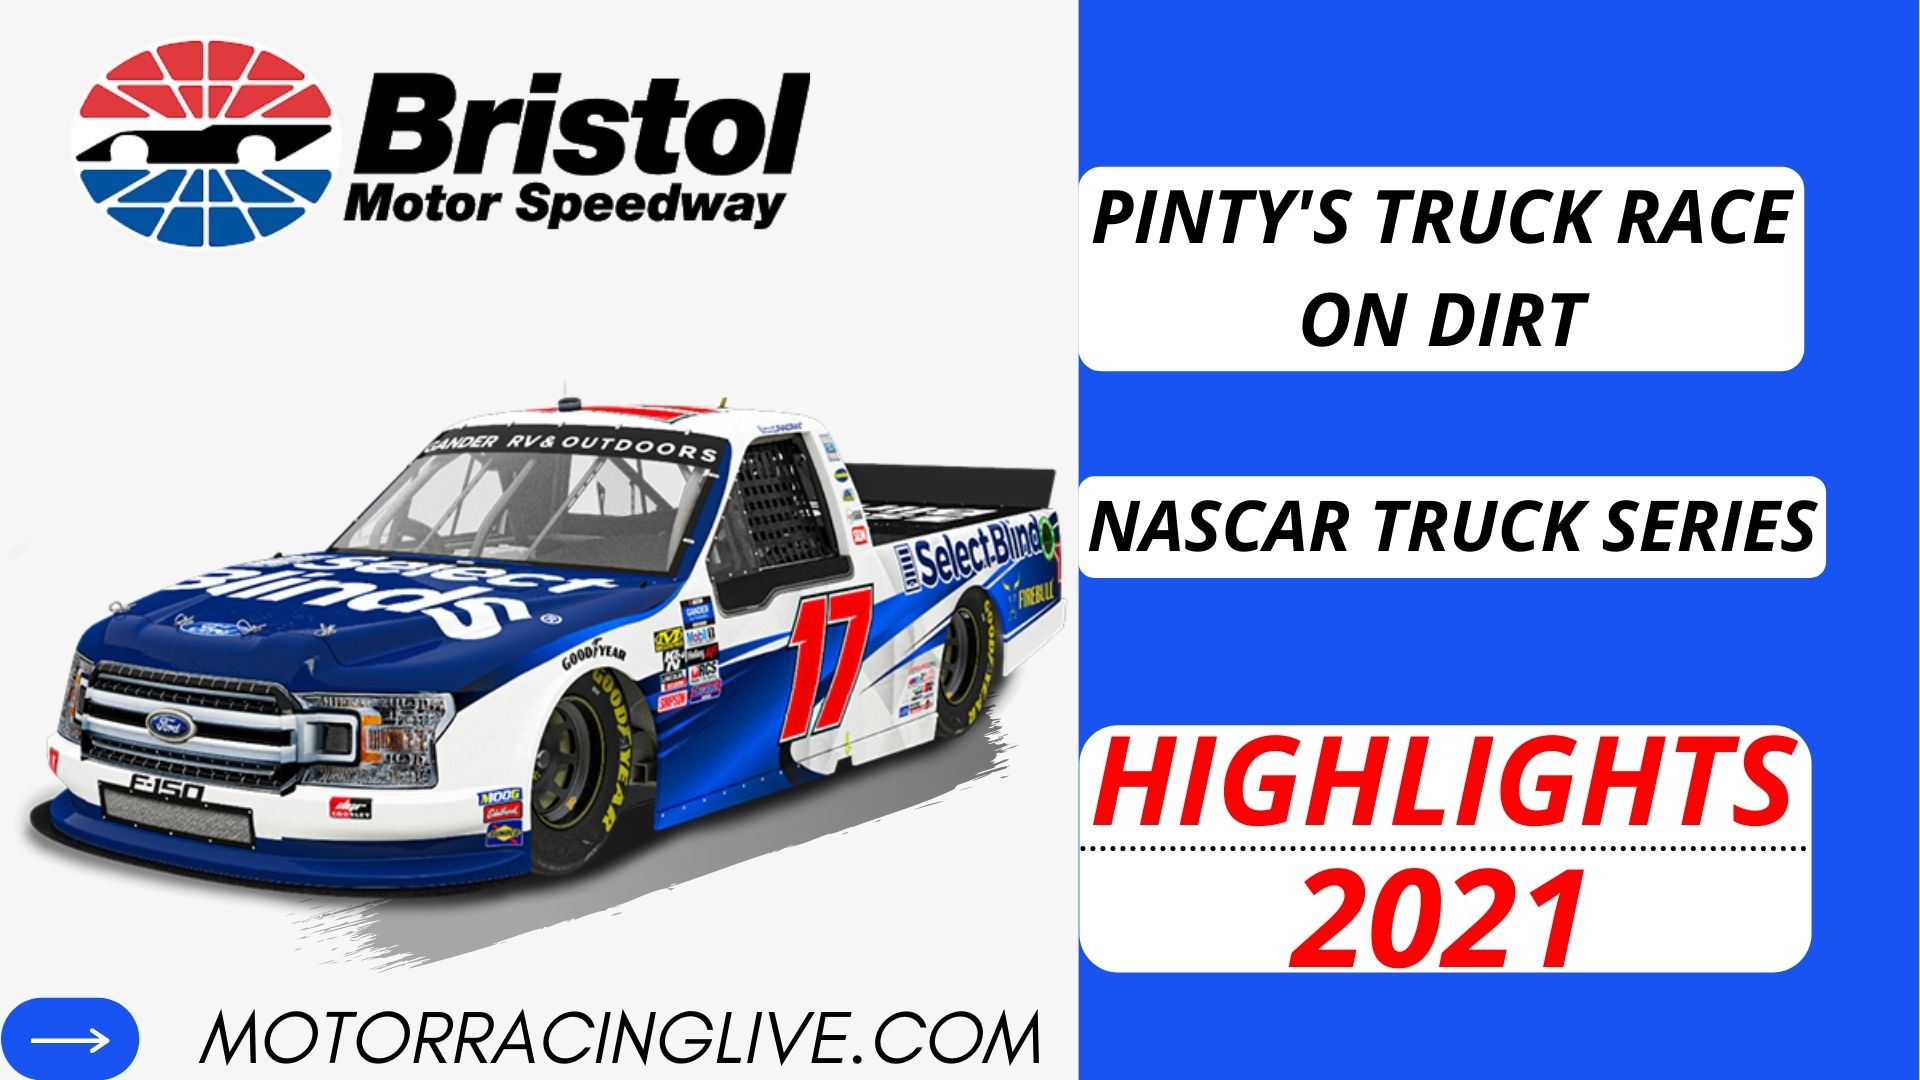 Pintys Truck Race On Dirt Highlights 2021 NASCAR Truck